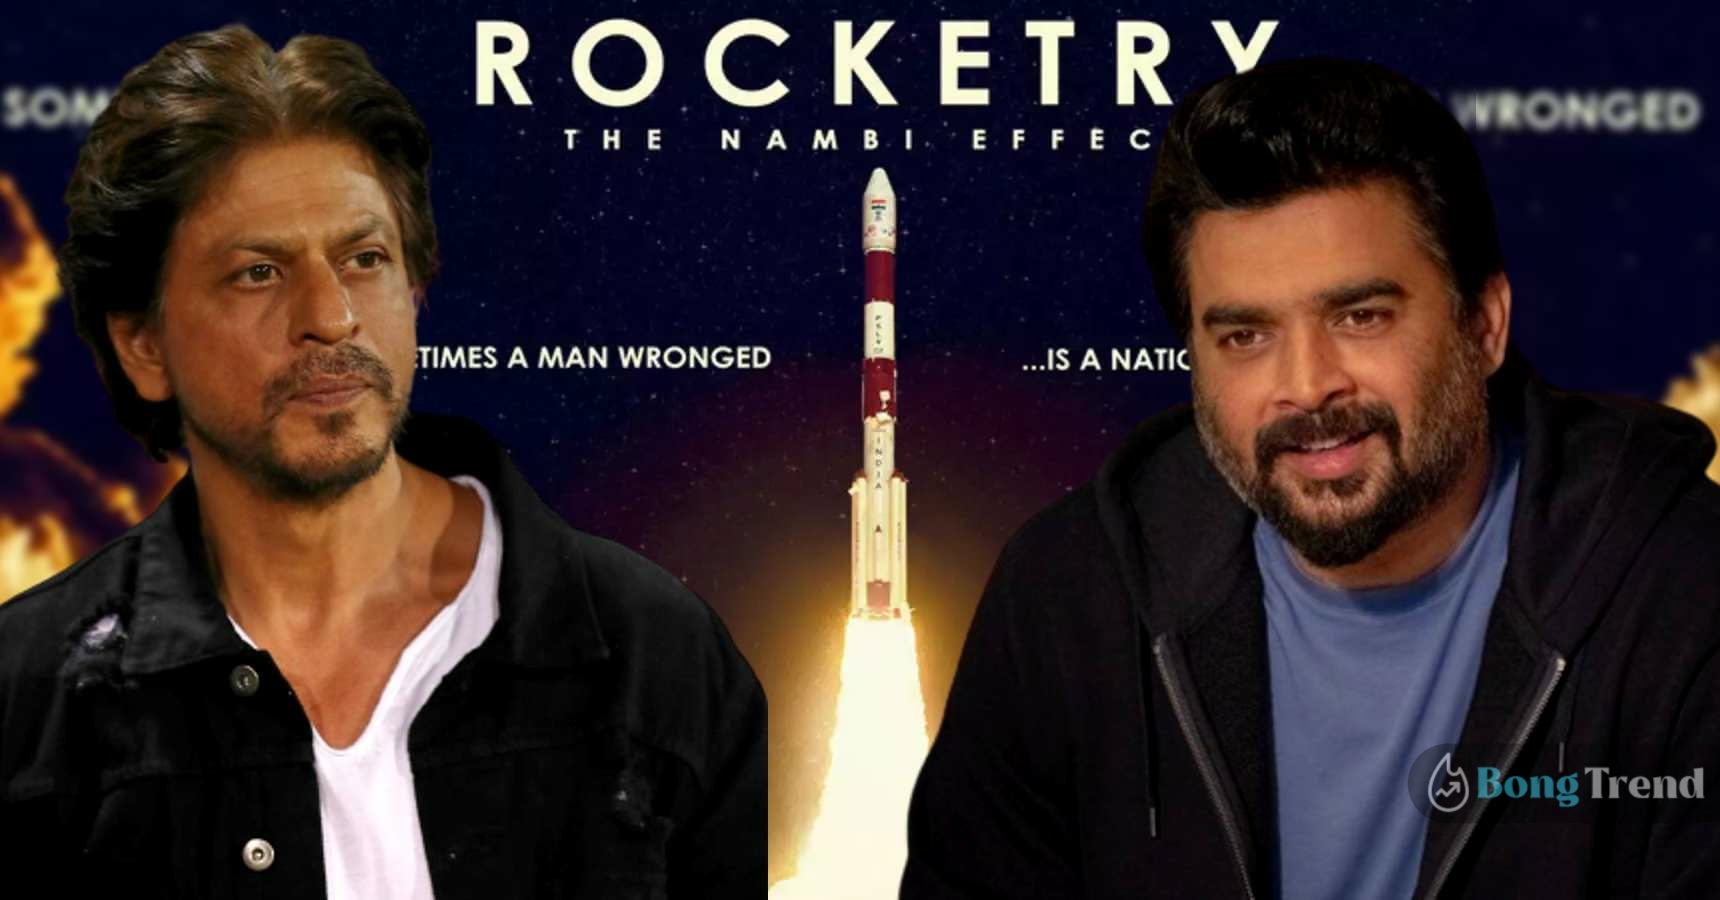 R Madhavan movie Rocketry failing even after casting Shahrukh Khan